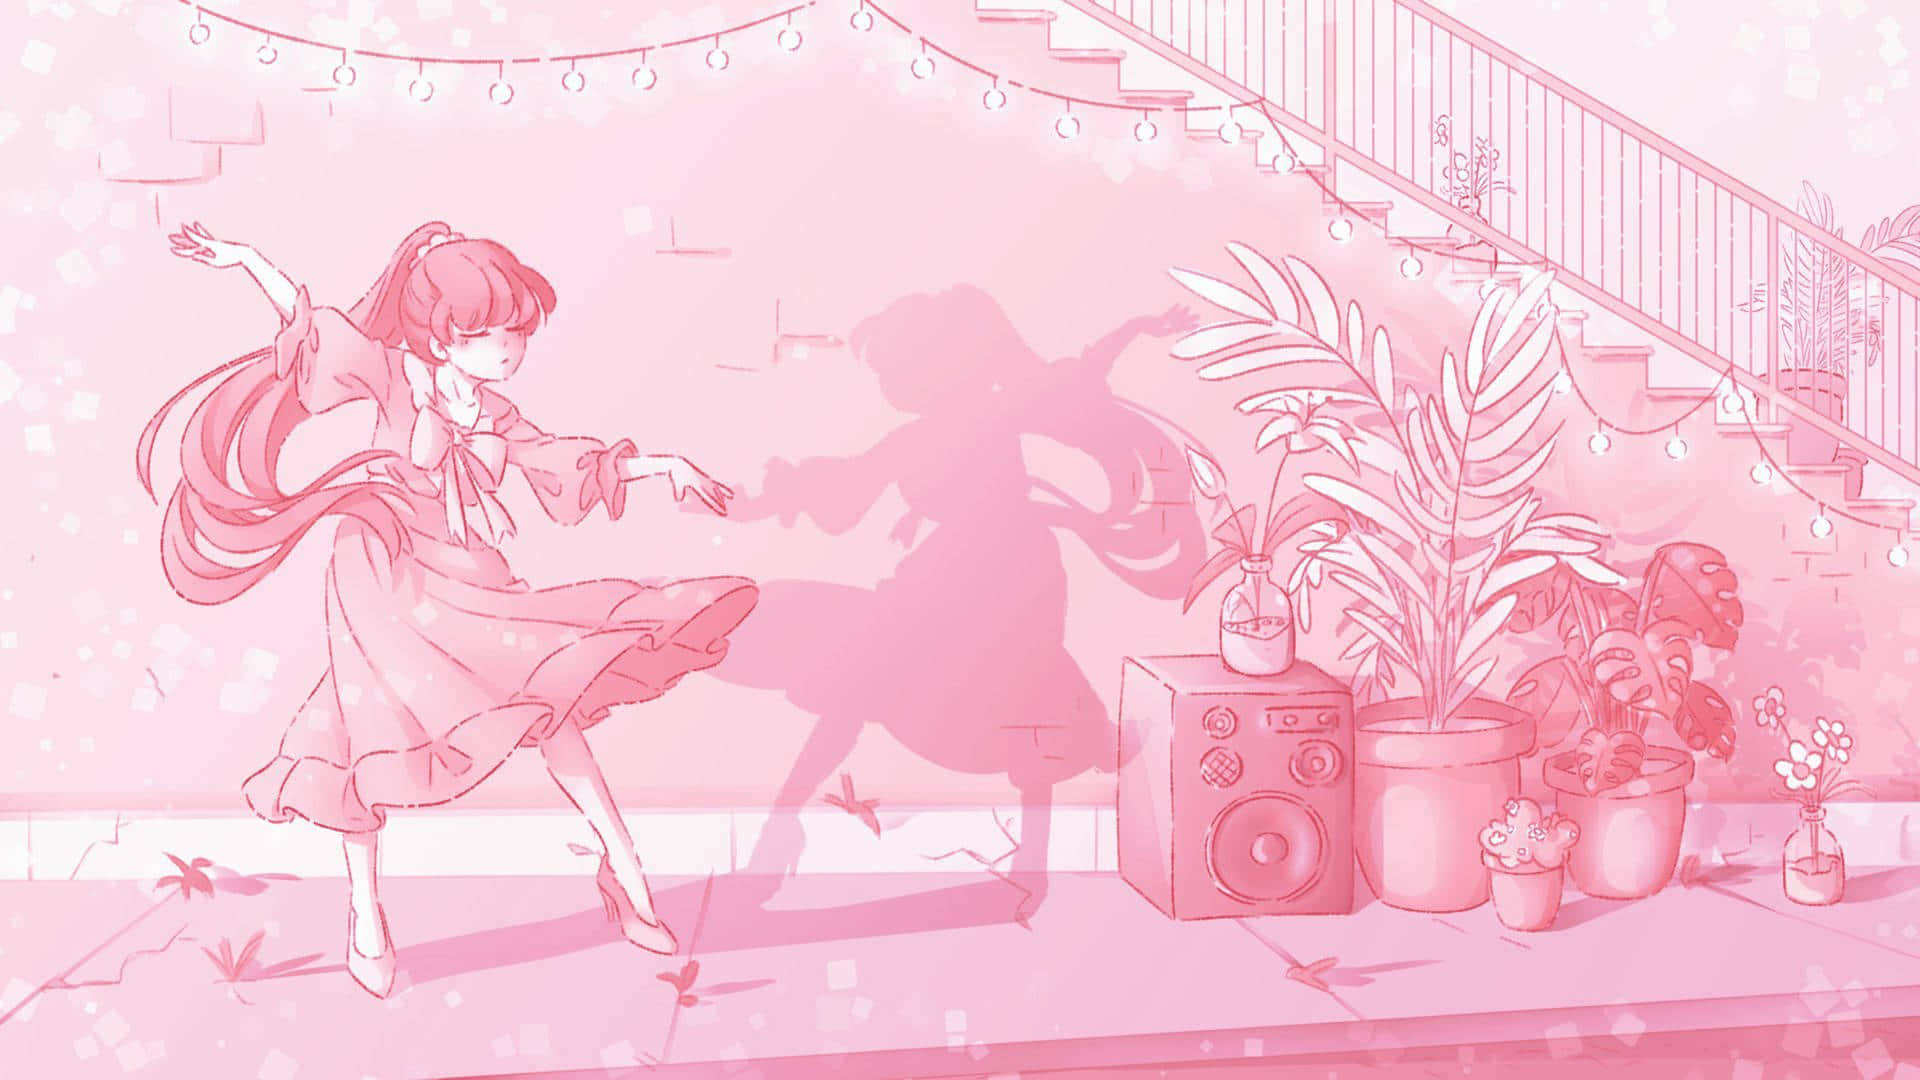 Bildestetisk Anime Illustration I Rosa Färg